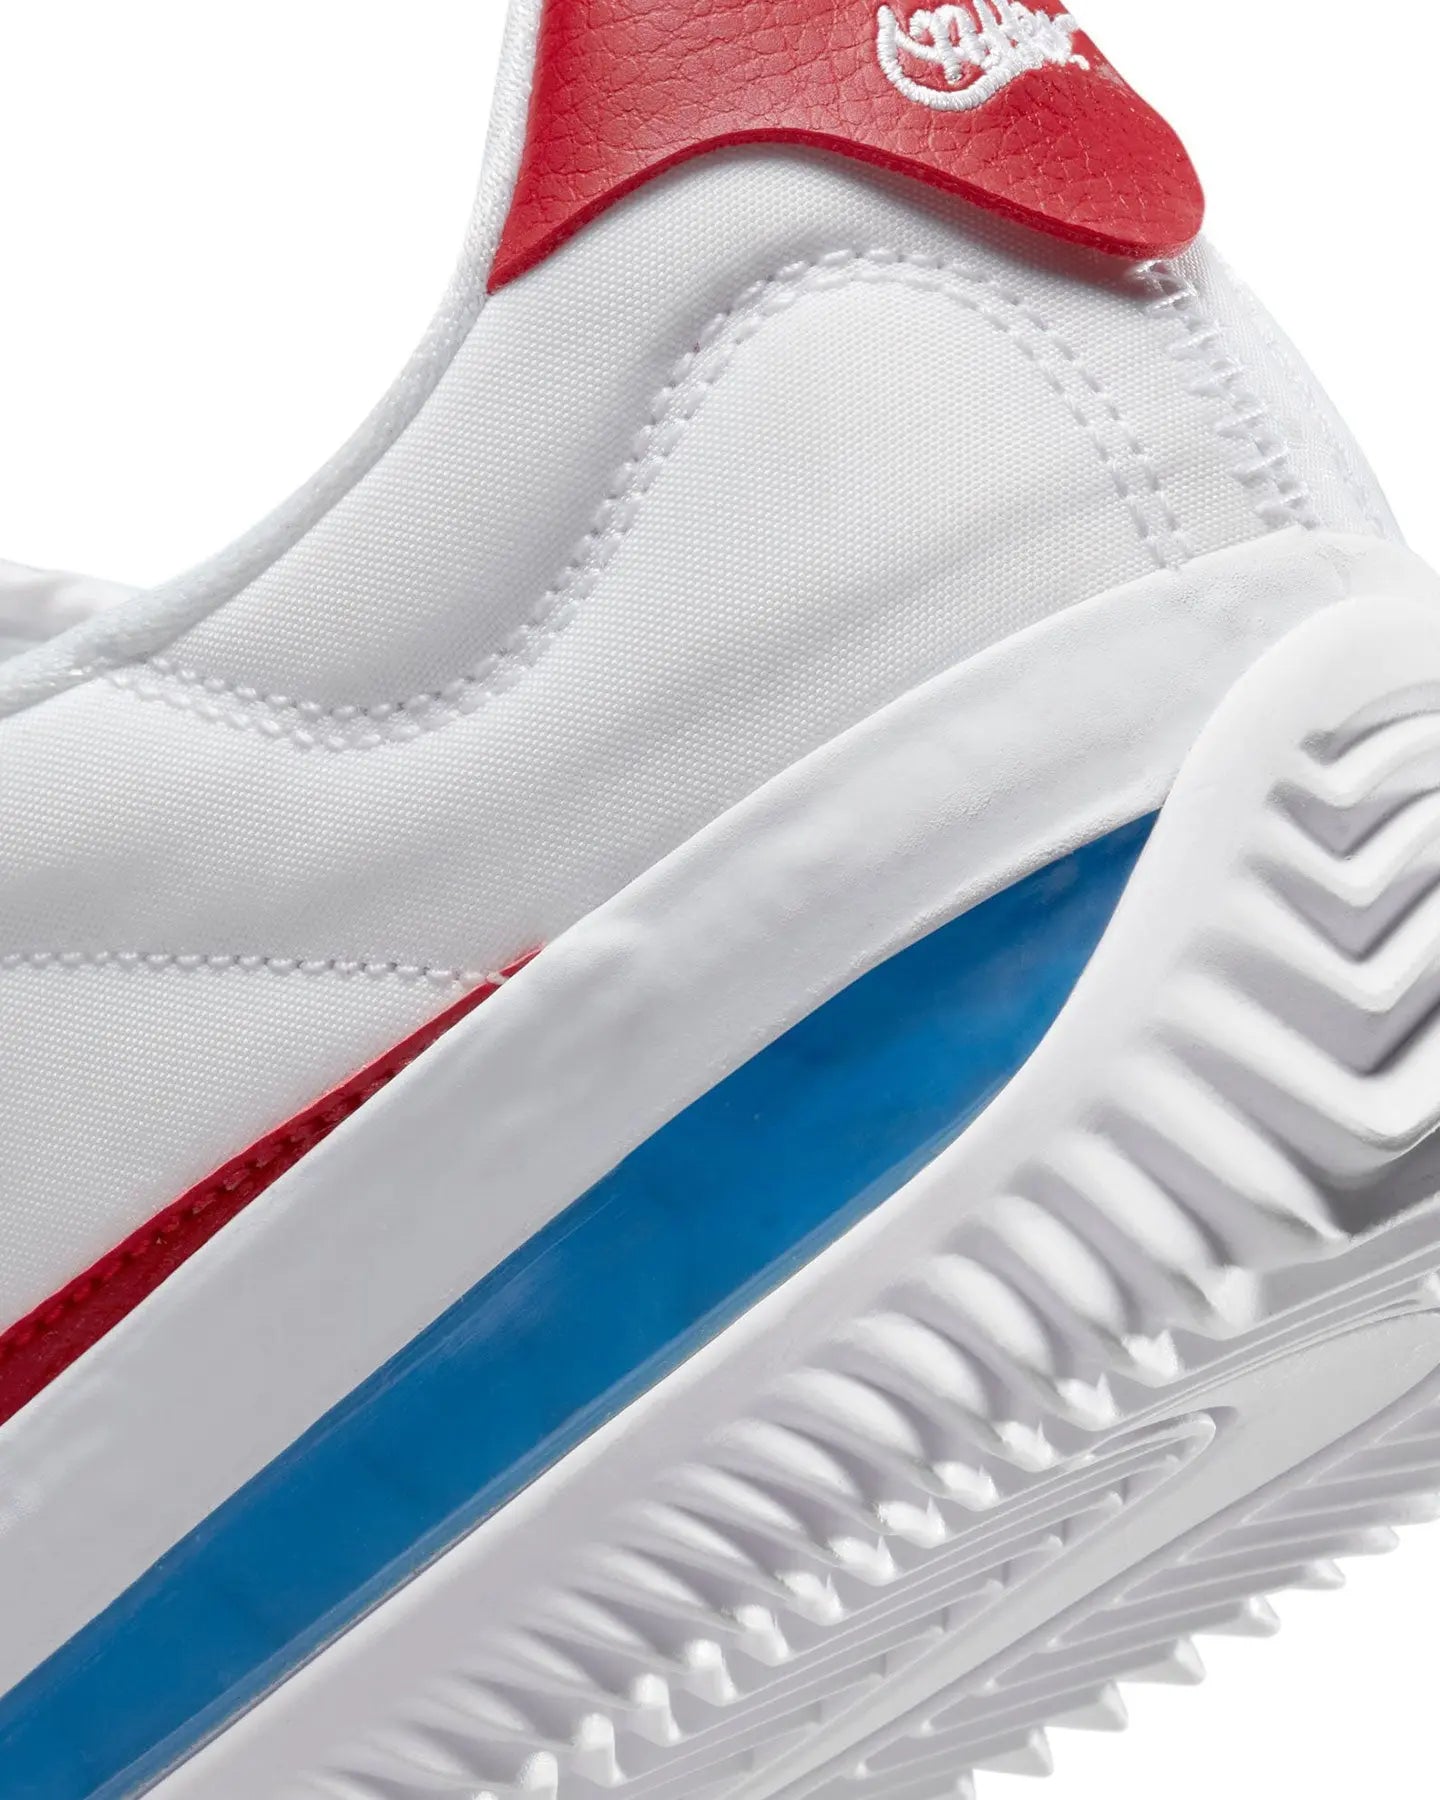 Nike SB BRSB - White / Varsity Royal / Varsity Red Footwear